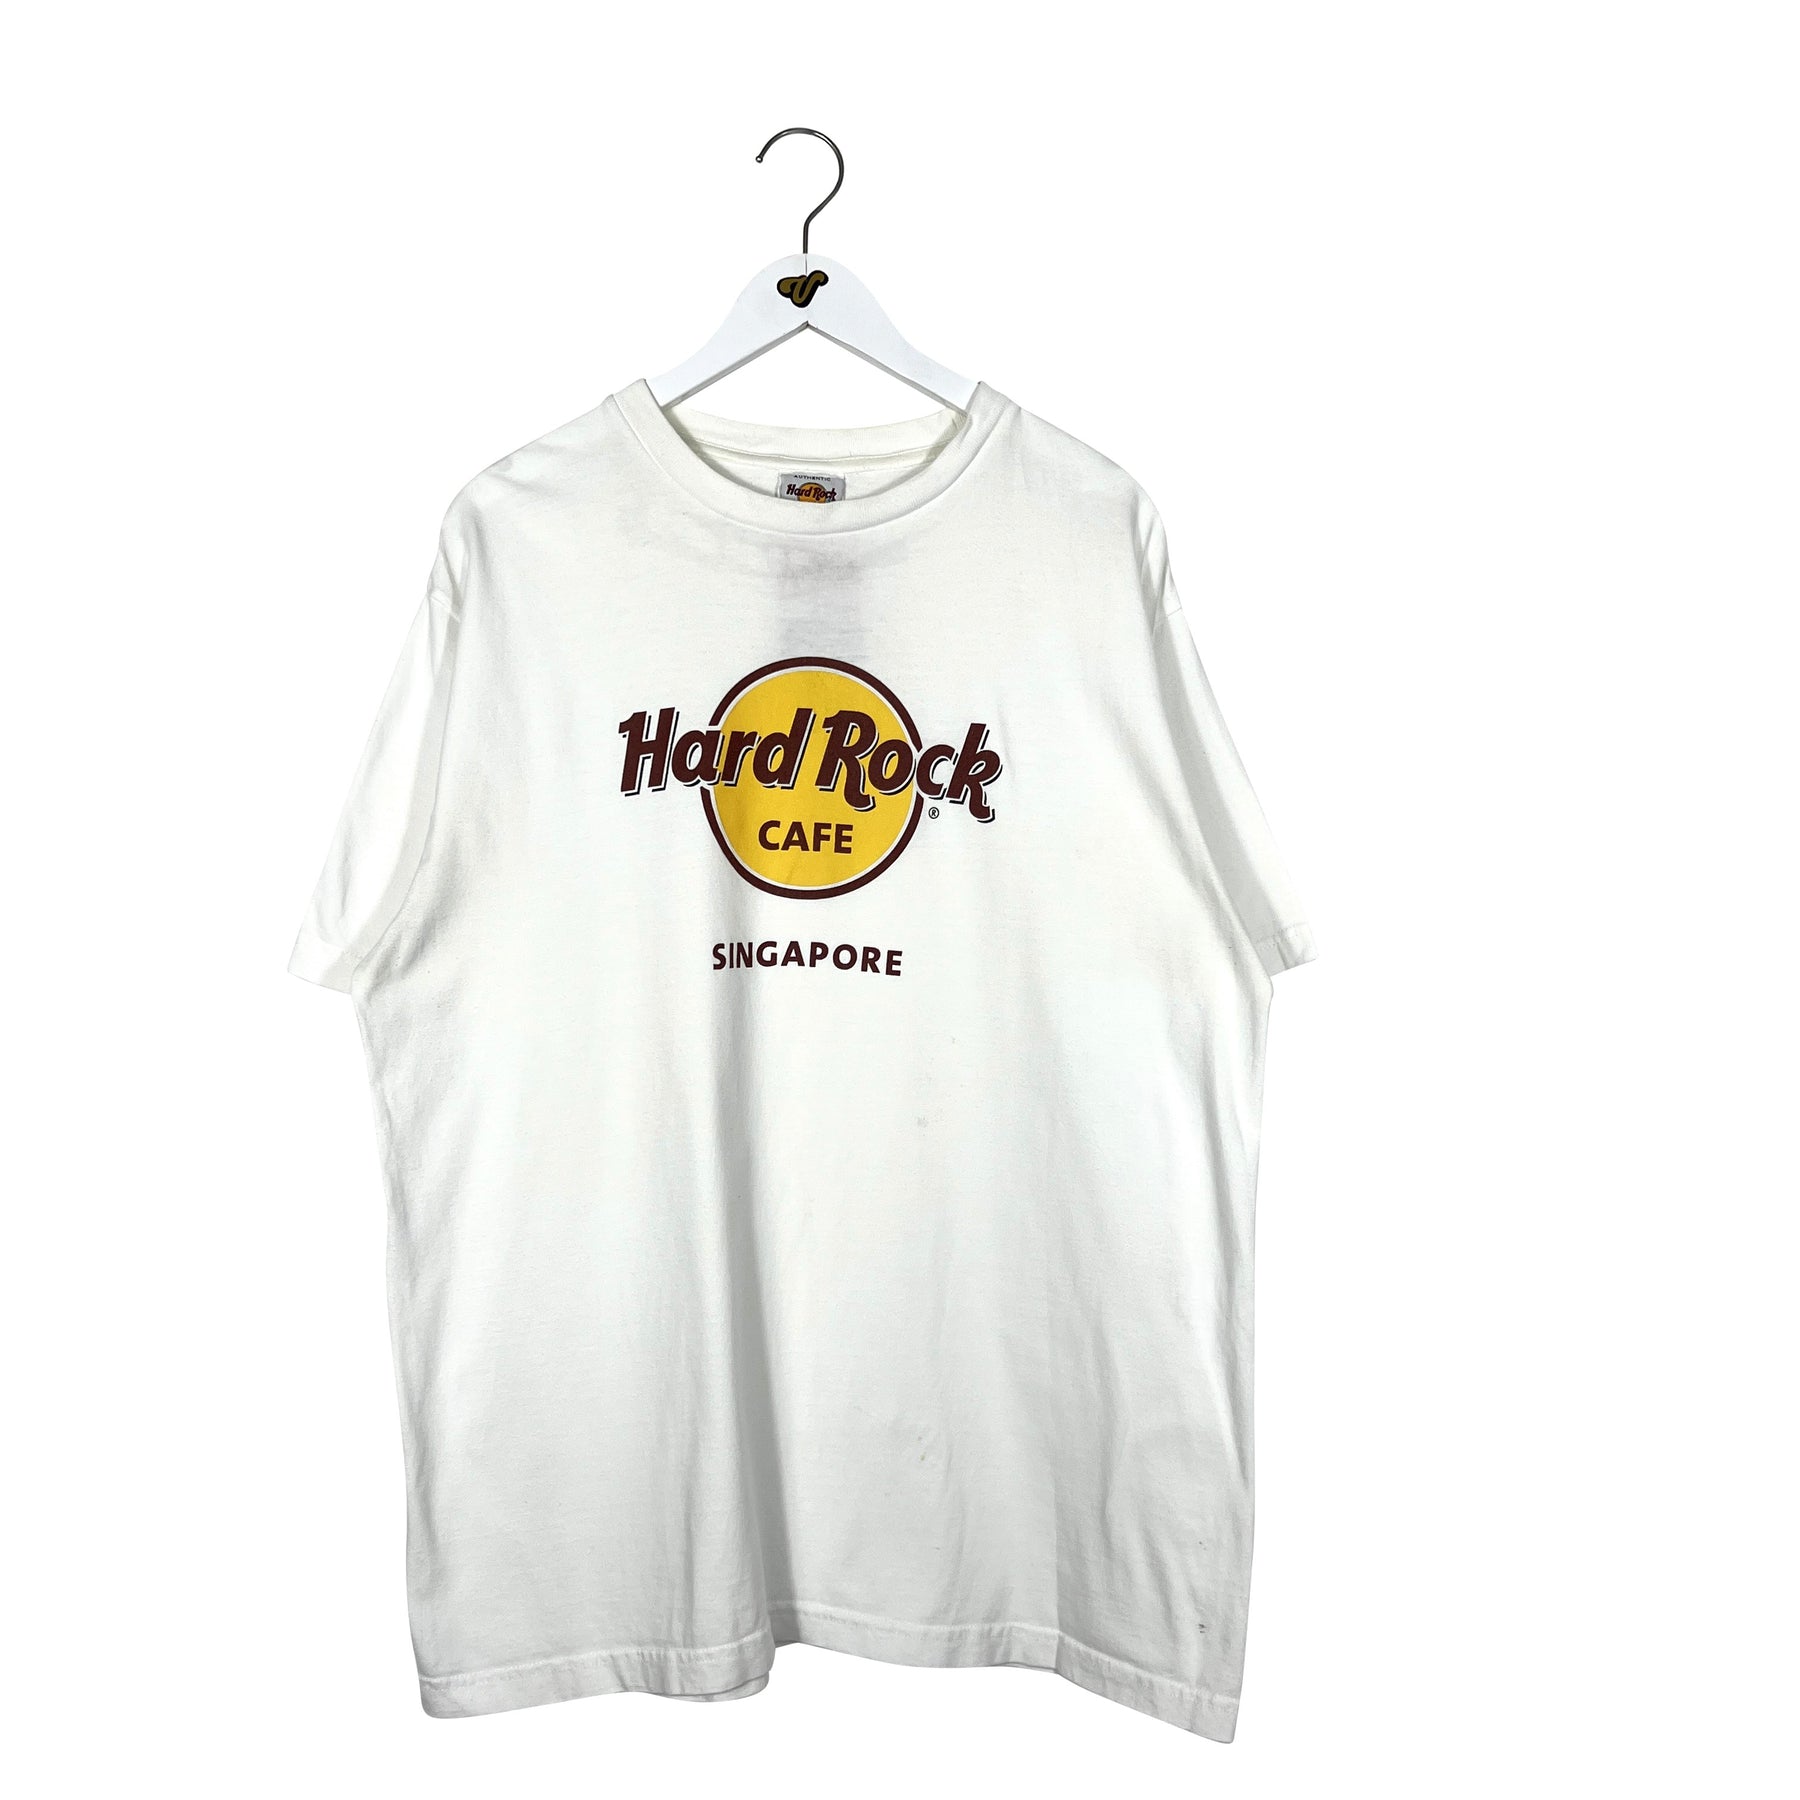 Vintage Hard Rock Cafe Singapore T-Shirt - Men's XL